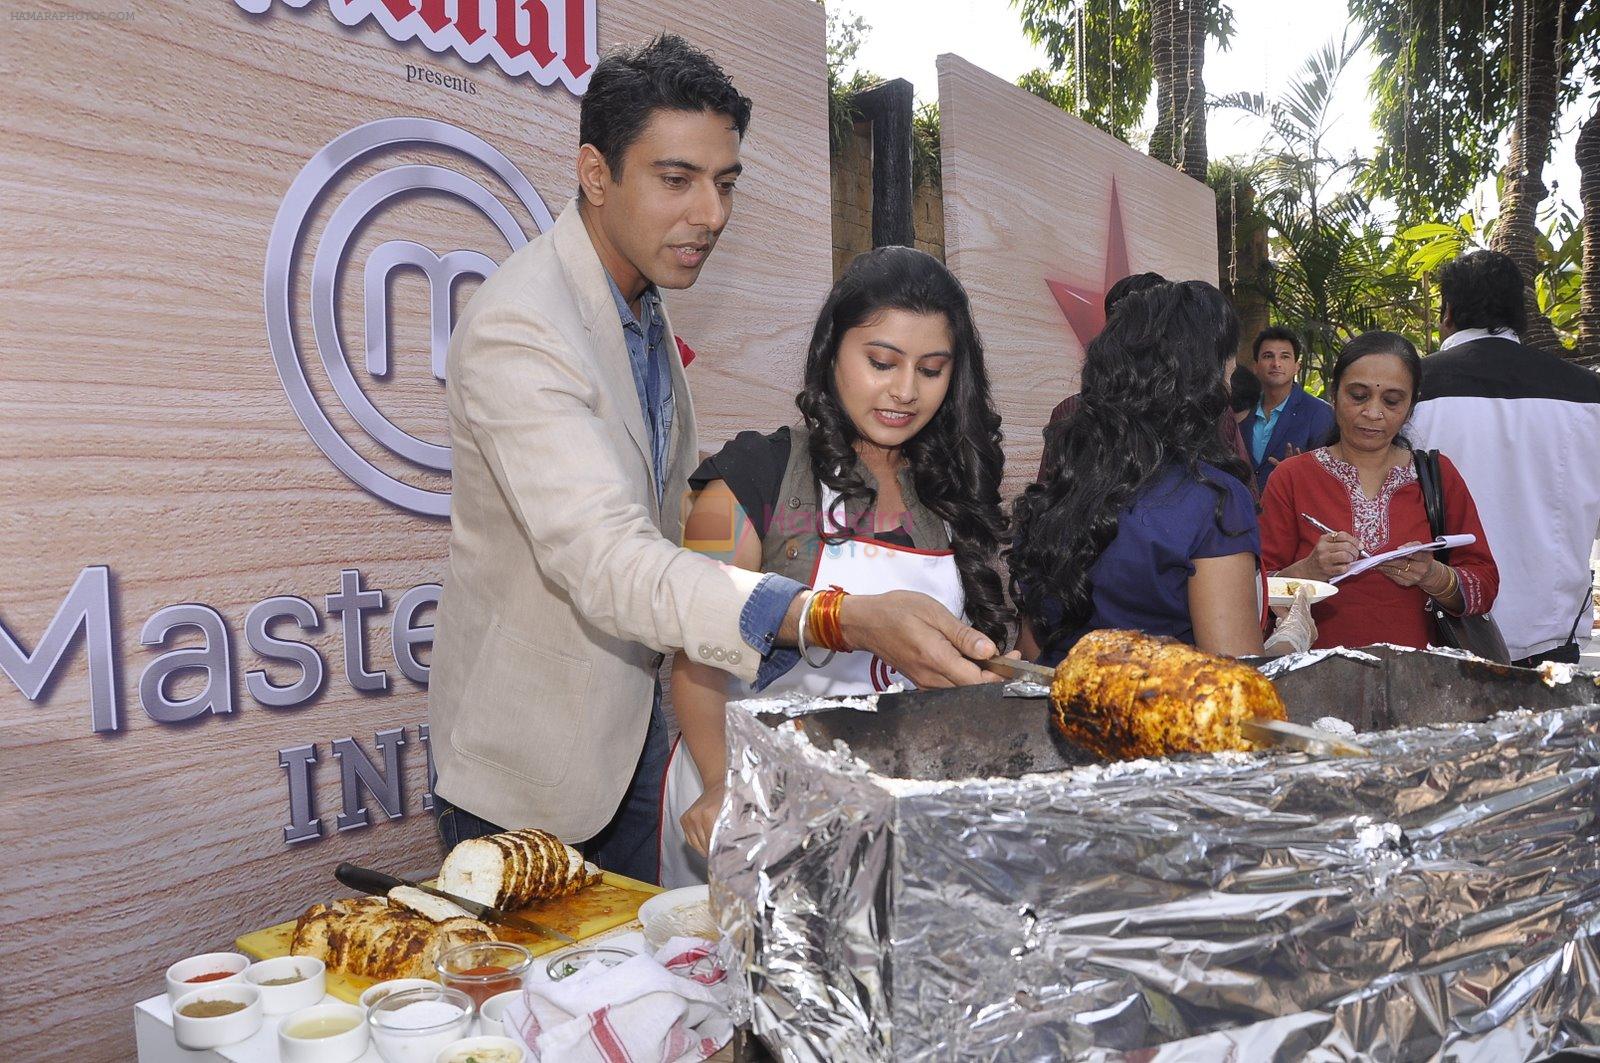 Star Plus launches new season of Master Chef in Mahalaxmi, Mumbai on 9th Jan 2015